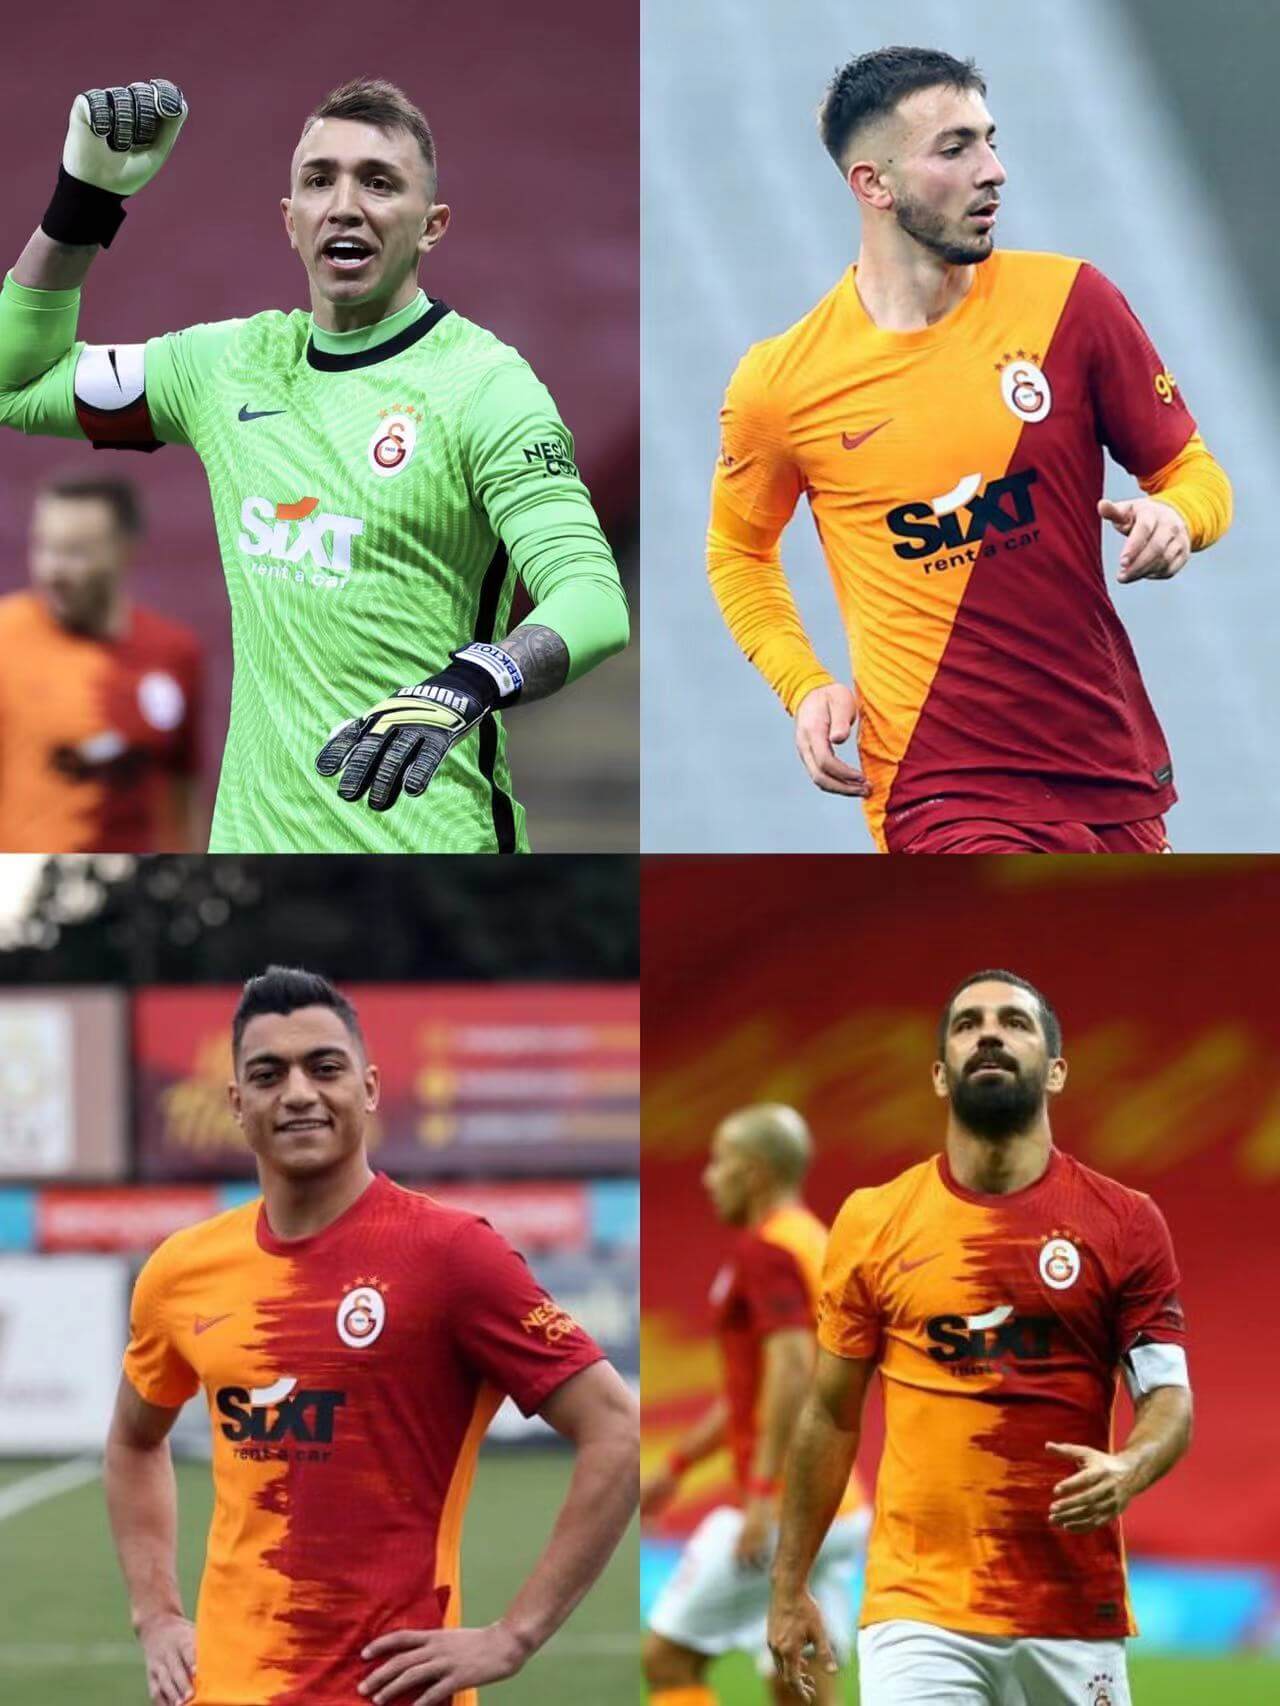 Galatasaray soccer jersey